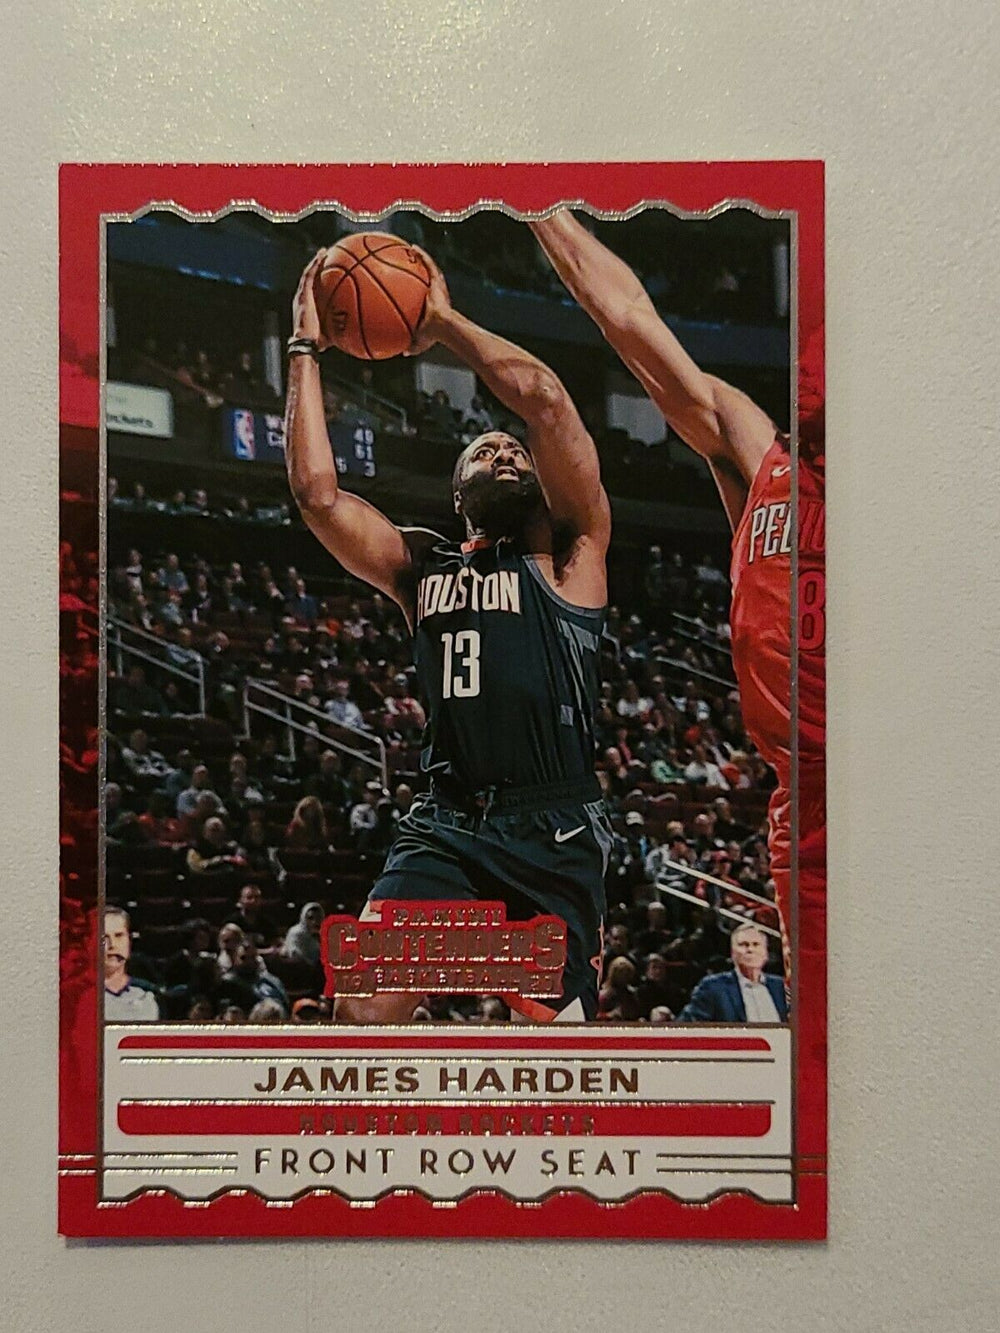 2019-20 Panini Contenders Front Row Seat #5 James Harden Houston Rockets